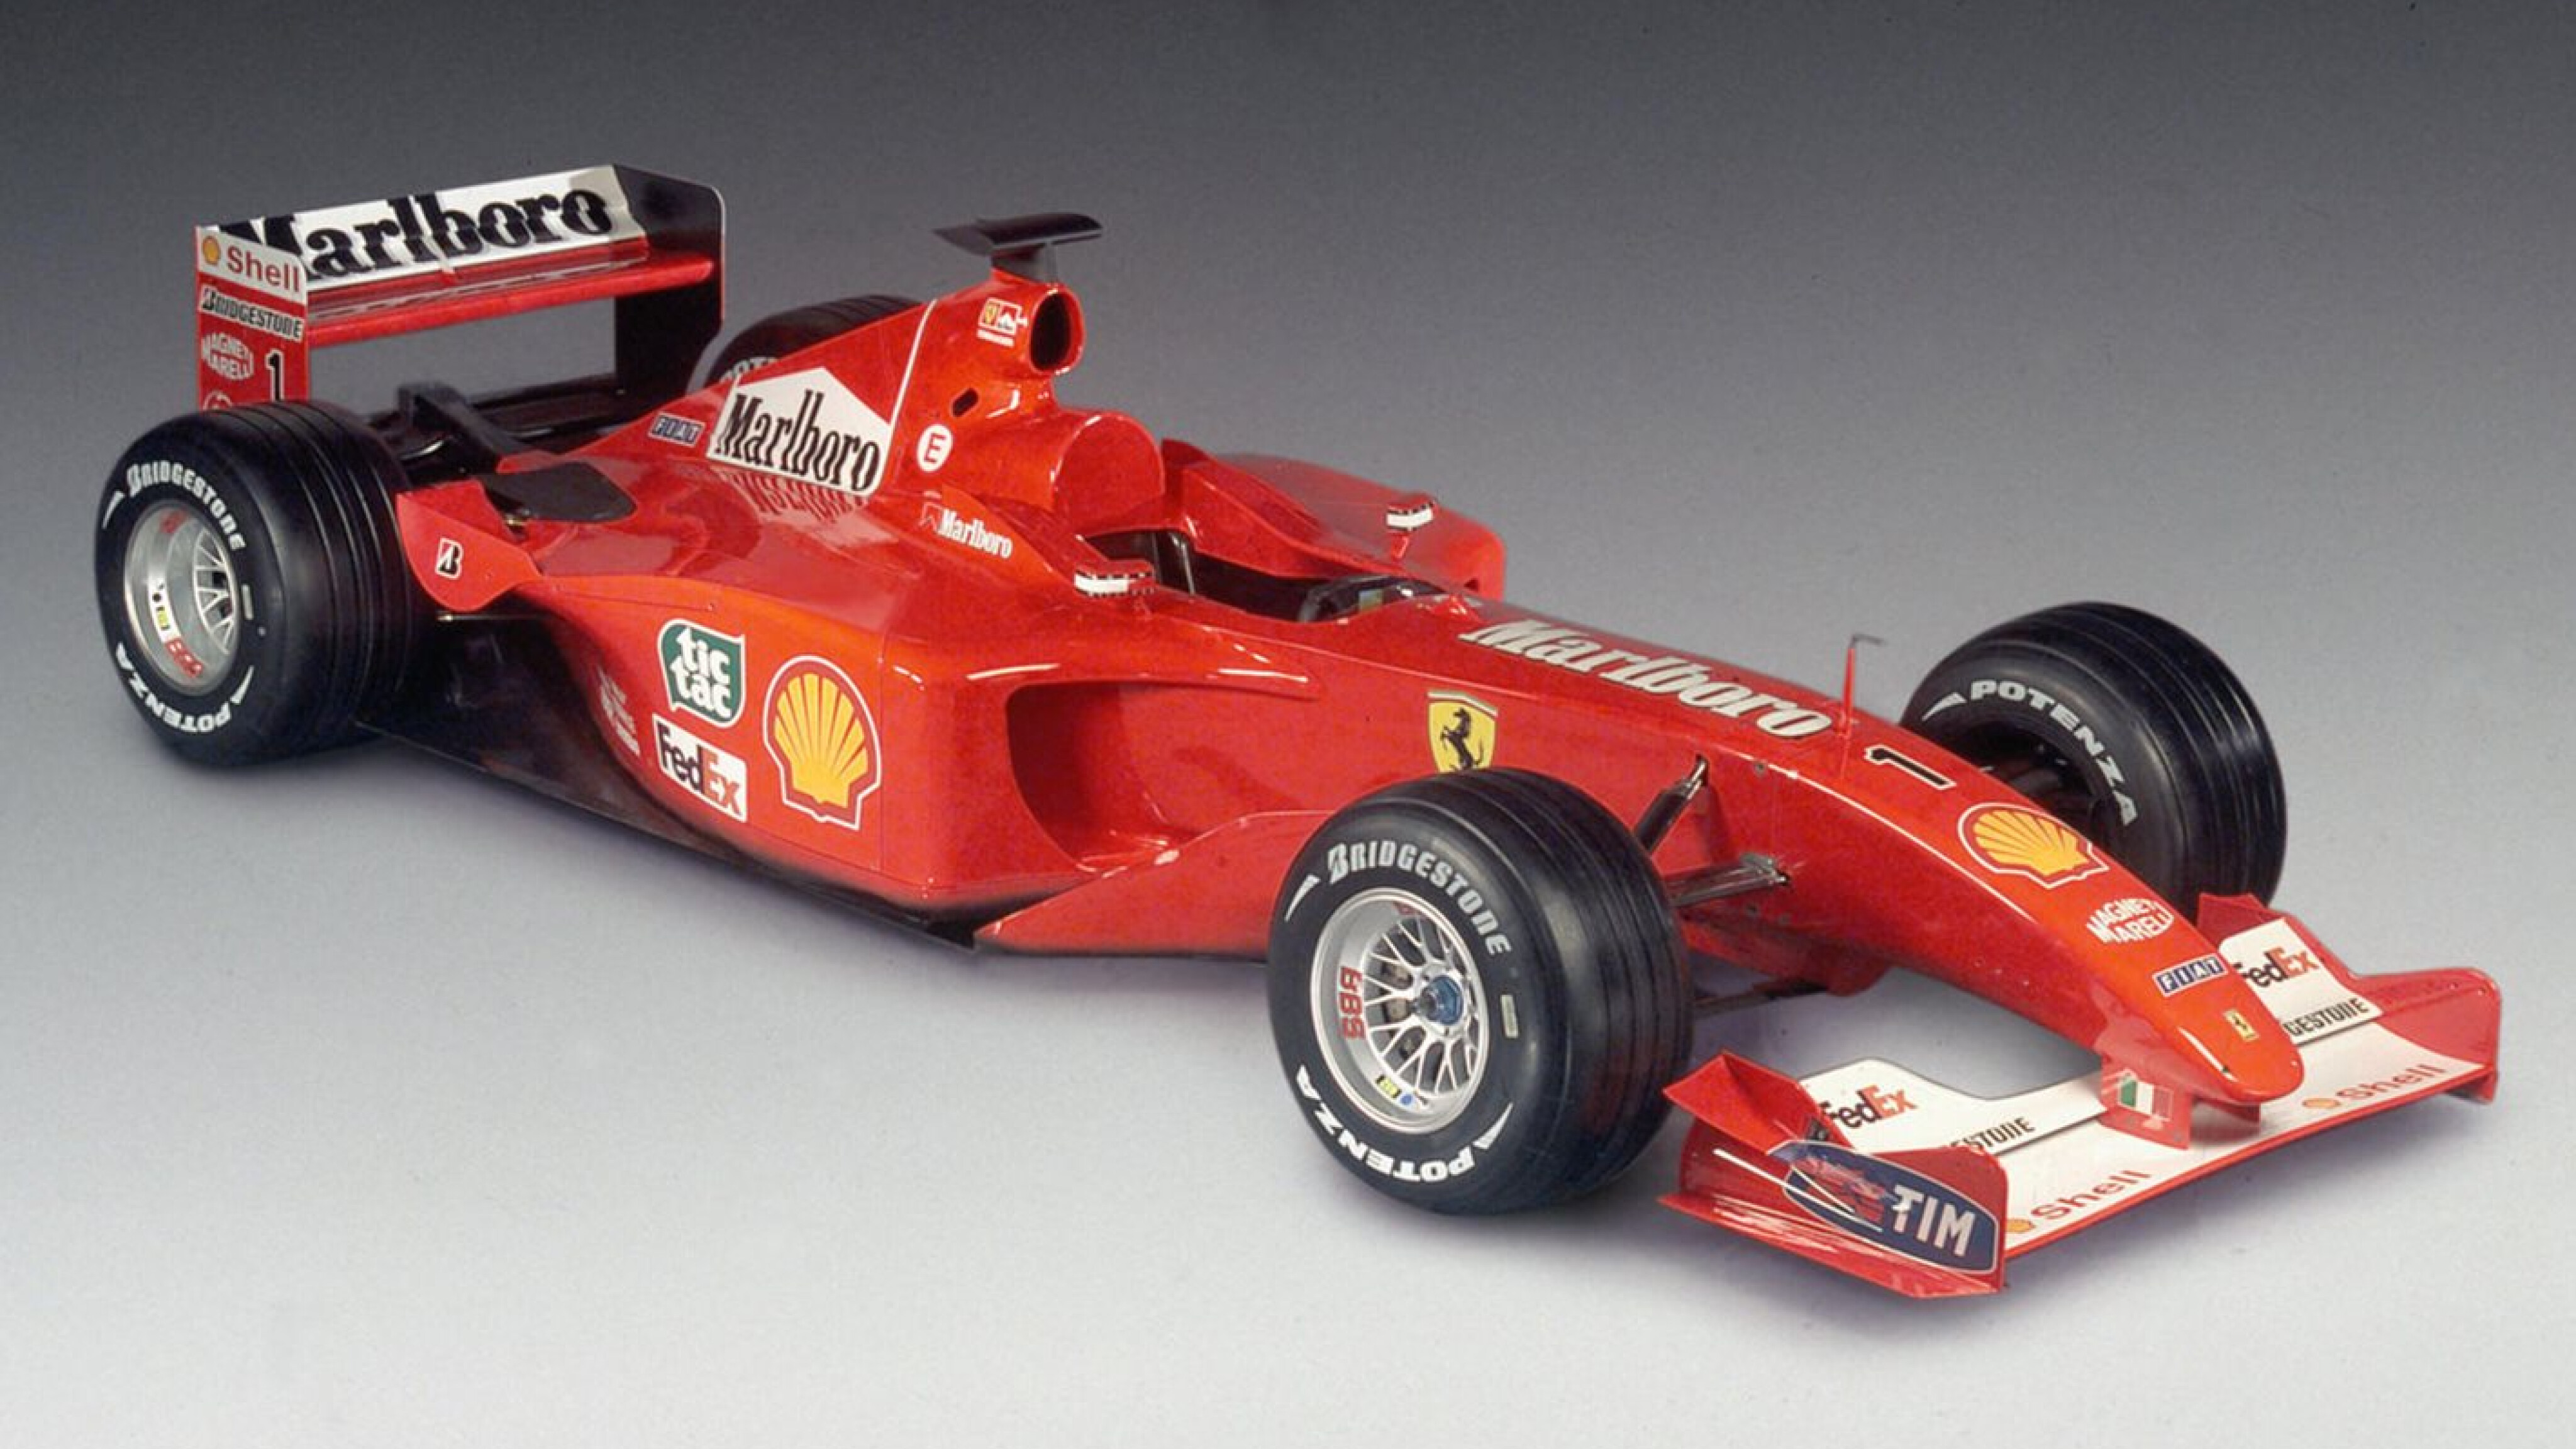 Michael Schumacher's 2001 Ferrari F2001 for sale